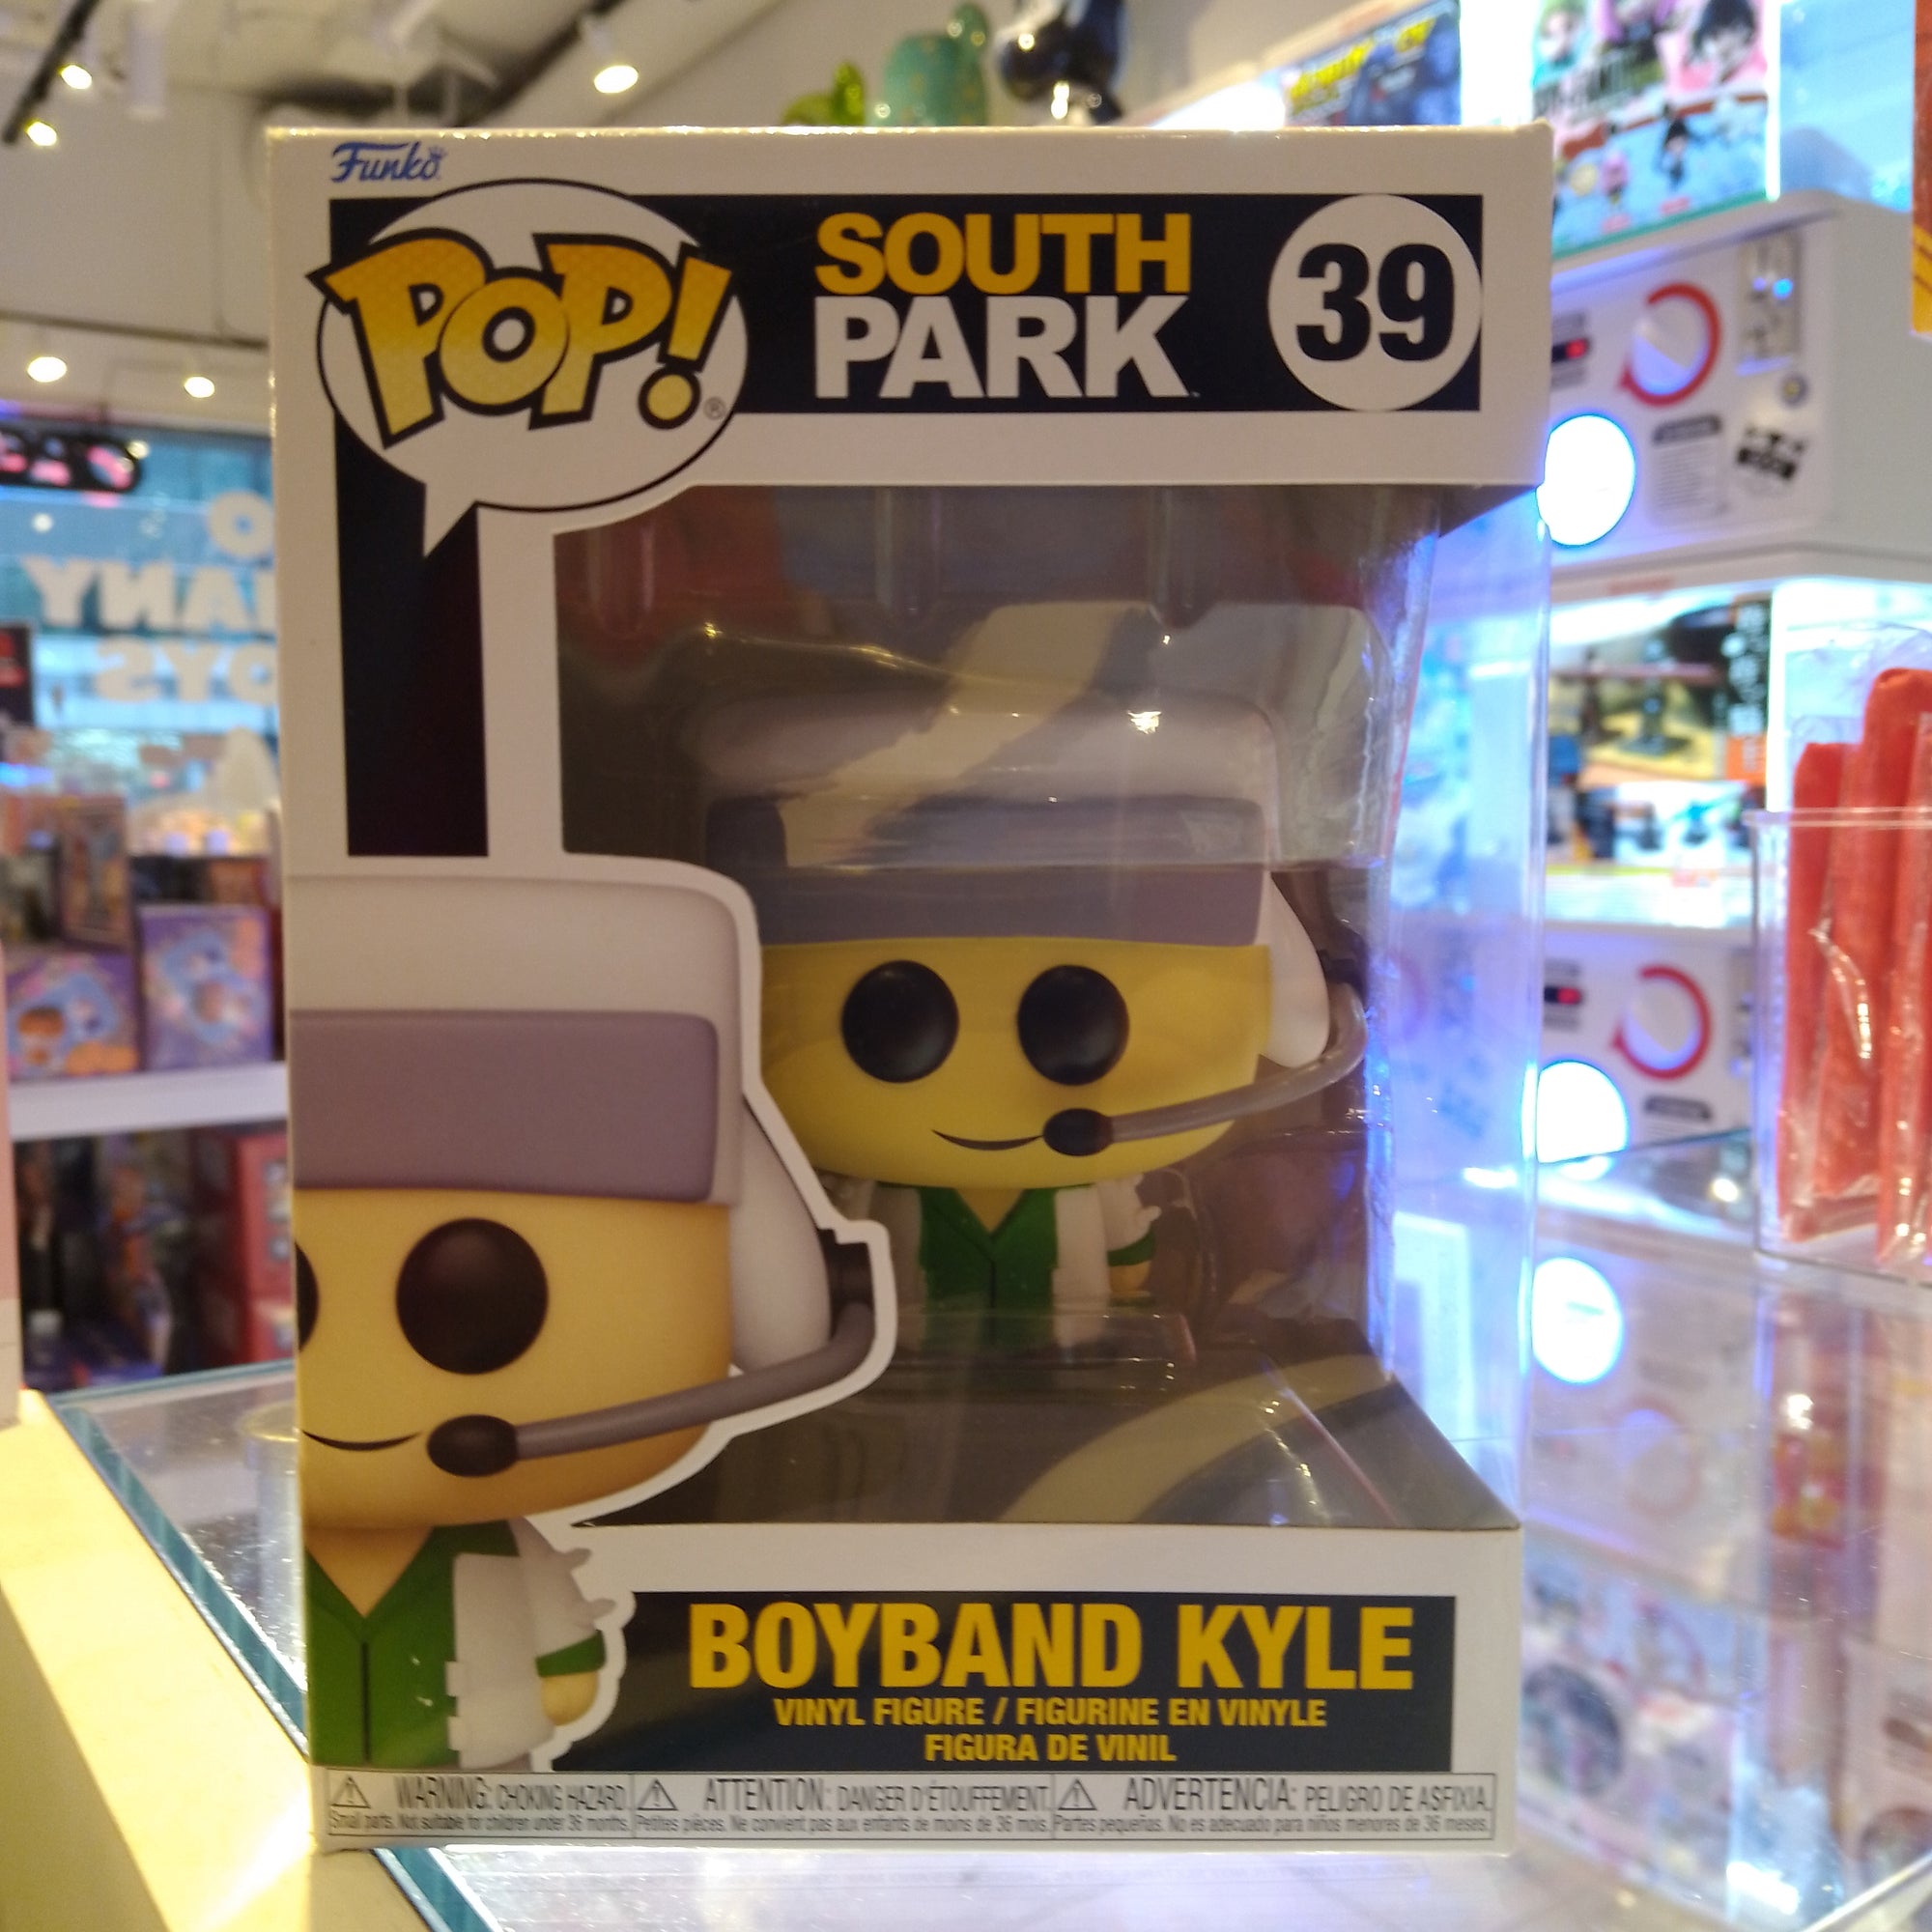 Boyband Kyle - South Park Funko POP! by Funko